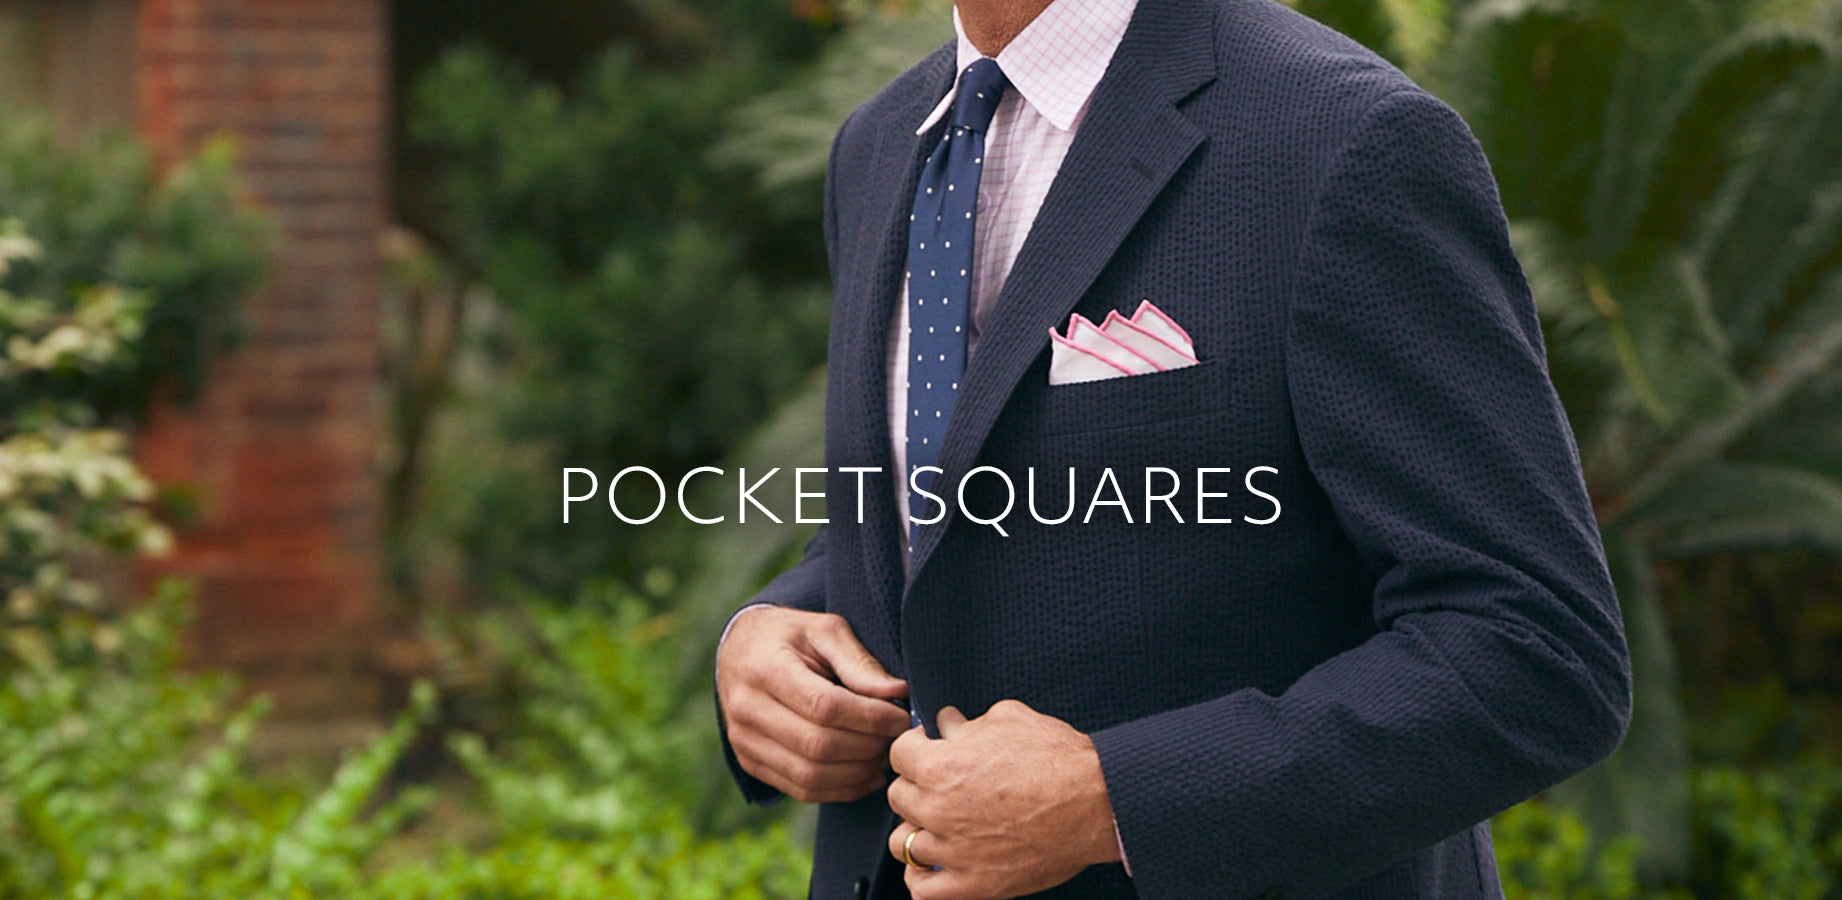 All Pocket Squares